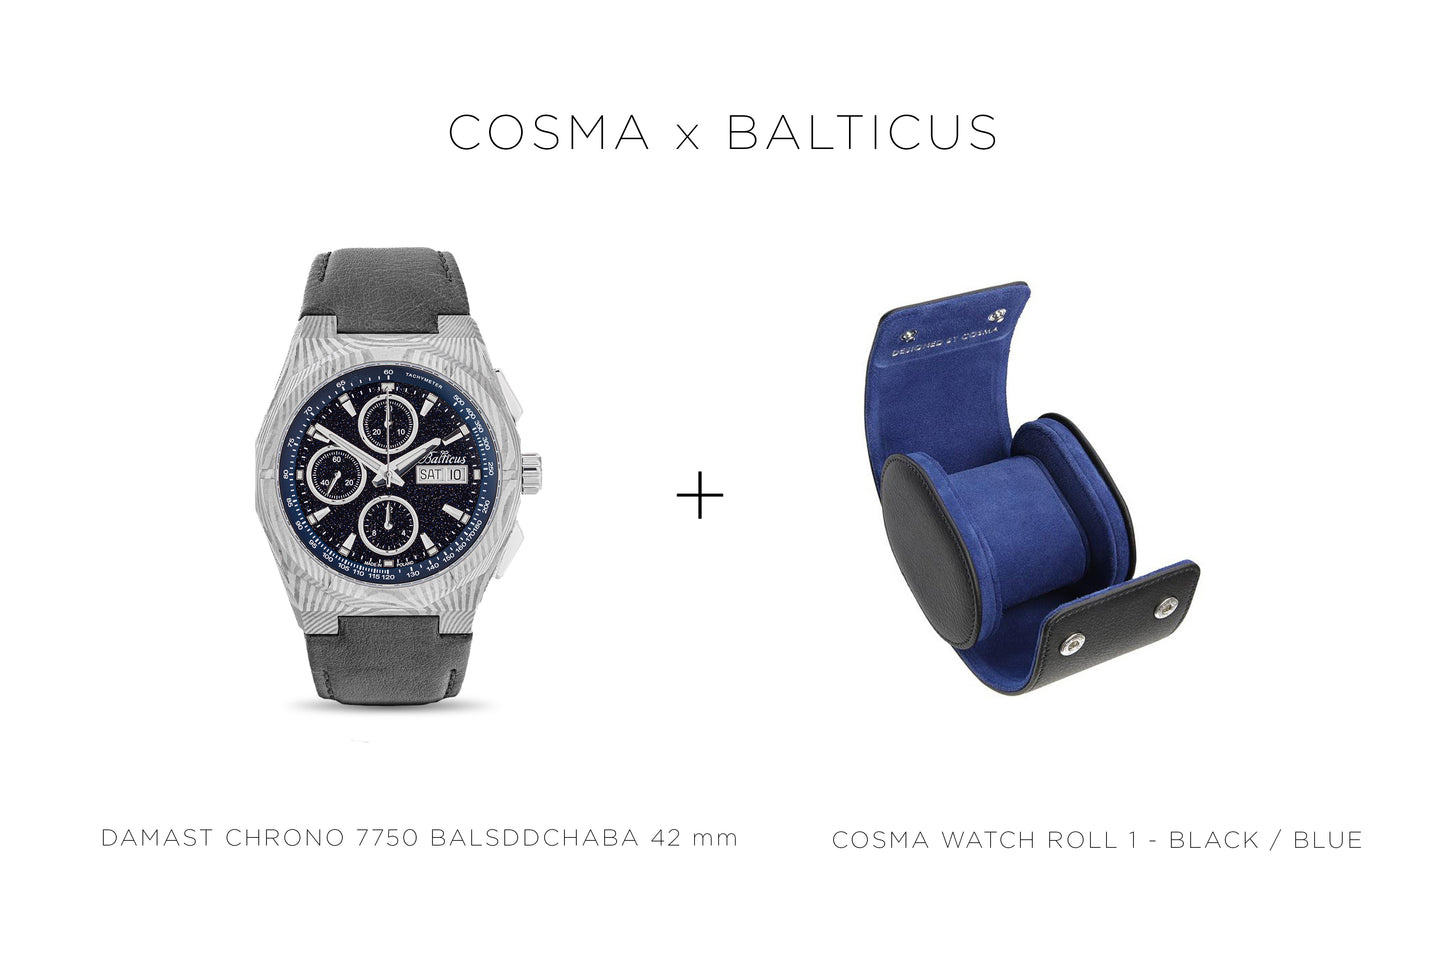 Balticus StarDust DAMAST CHRONO 7750 BALSDDCHABA 42 mm, blue aventurine + Cosma Watch Roll 1